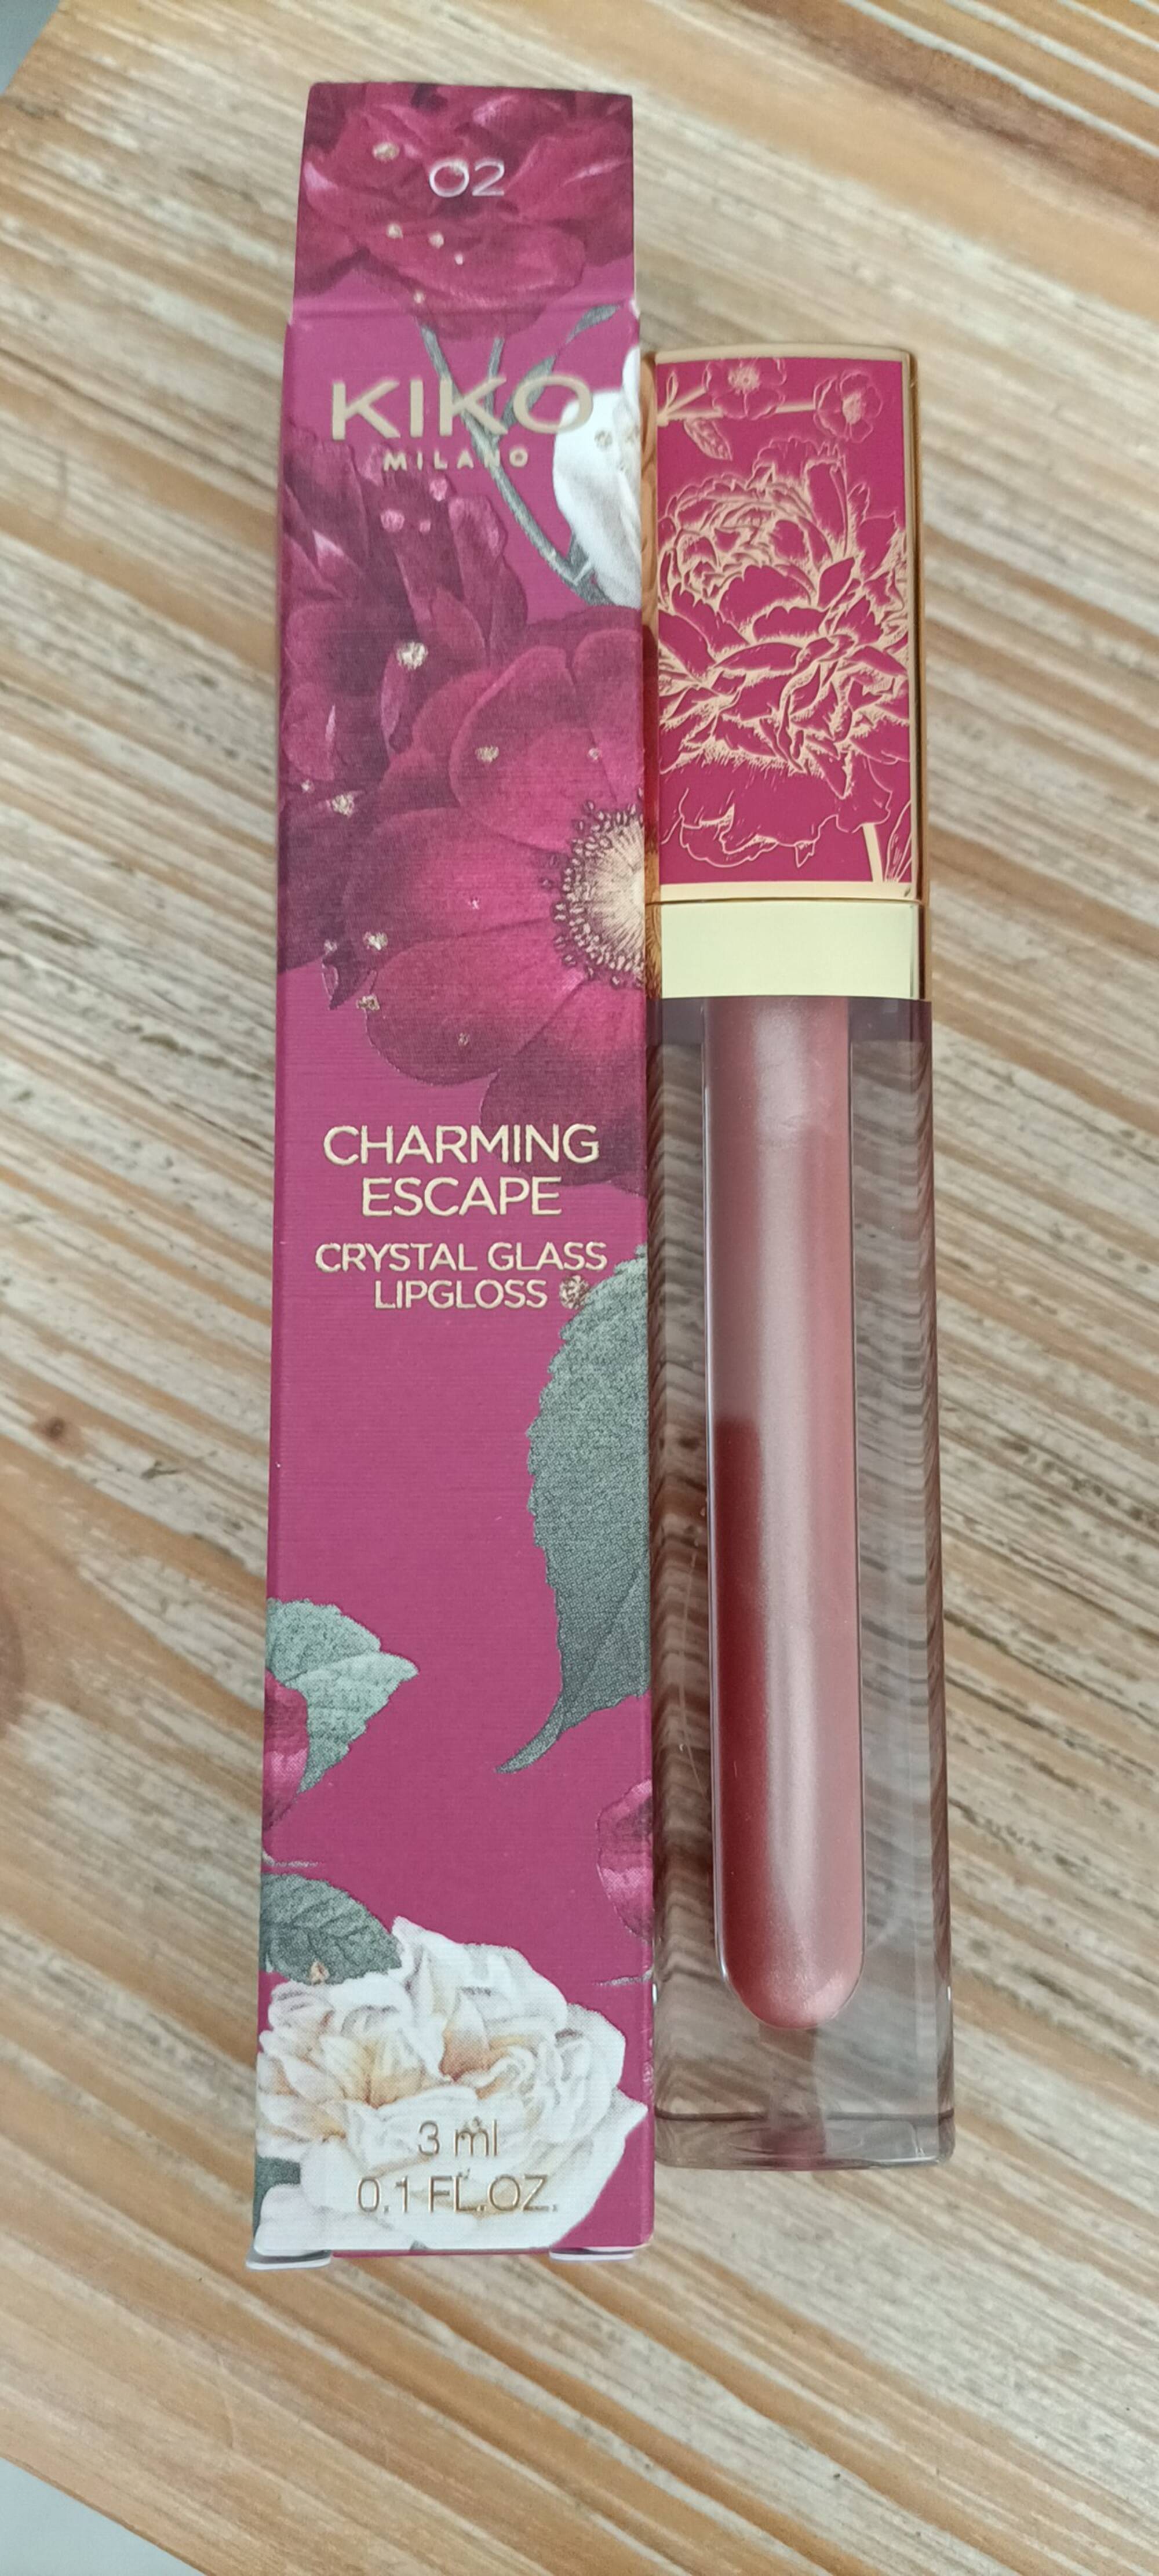 KIKO - Charming escape - Crystal glass lipgloss